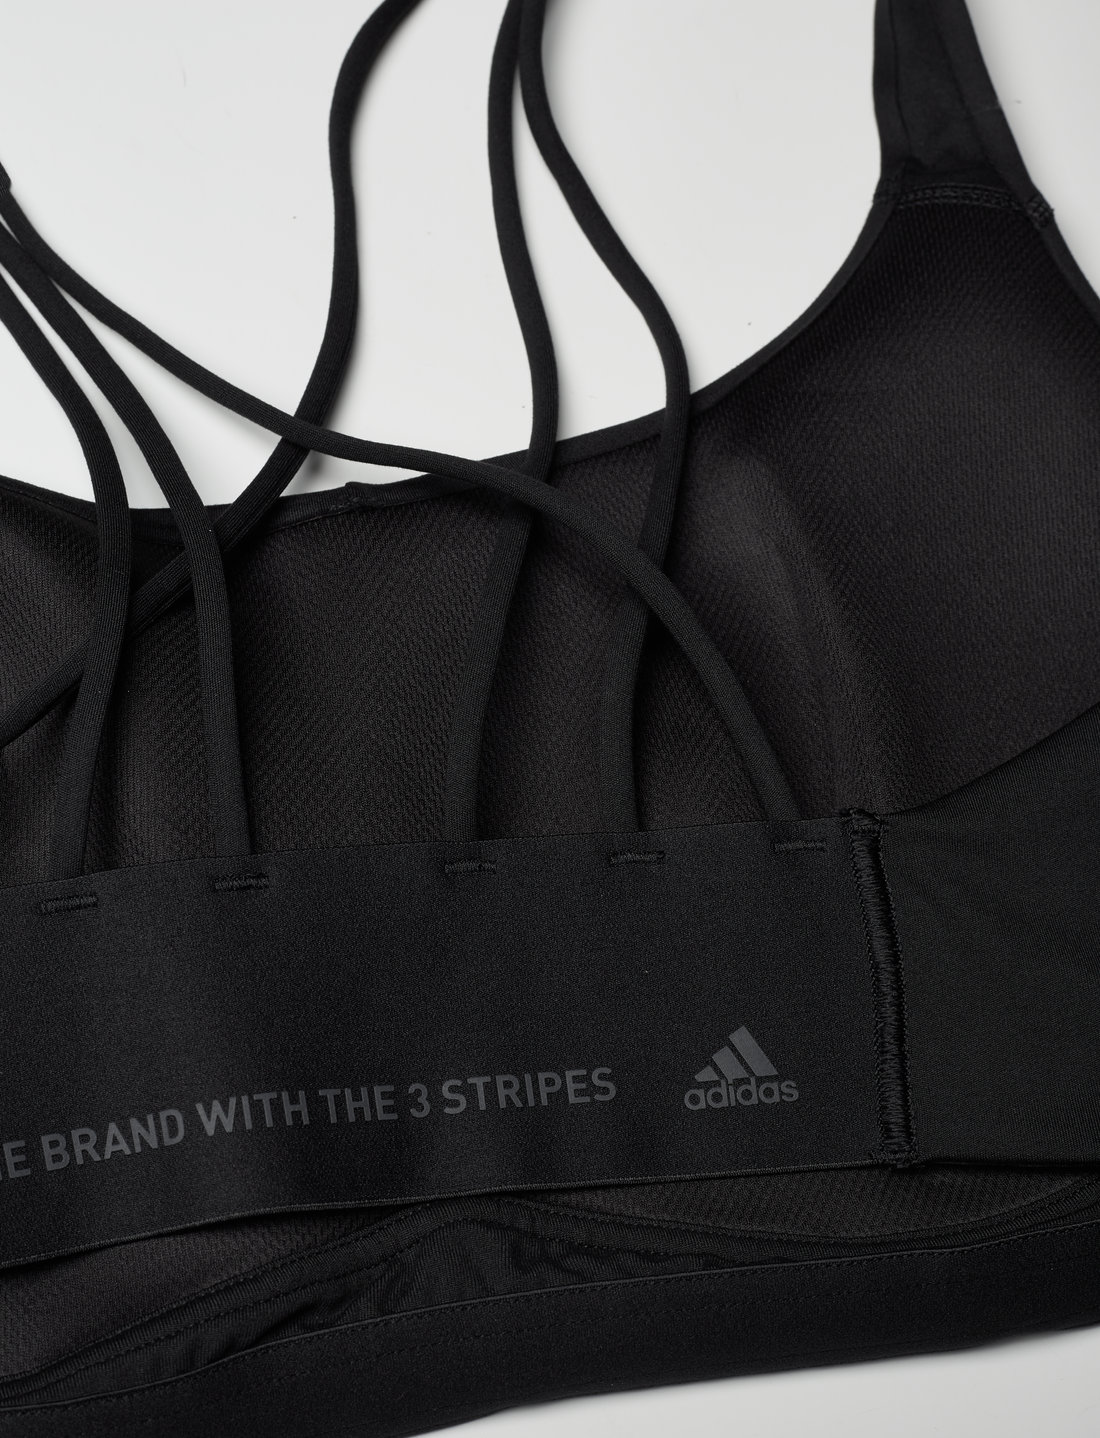 adidas Performance Coreflow Medium-support Bra – bras – shop at